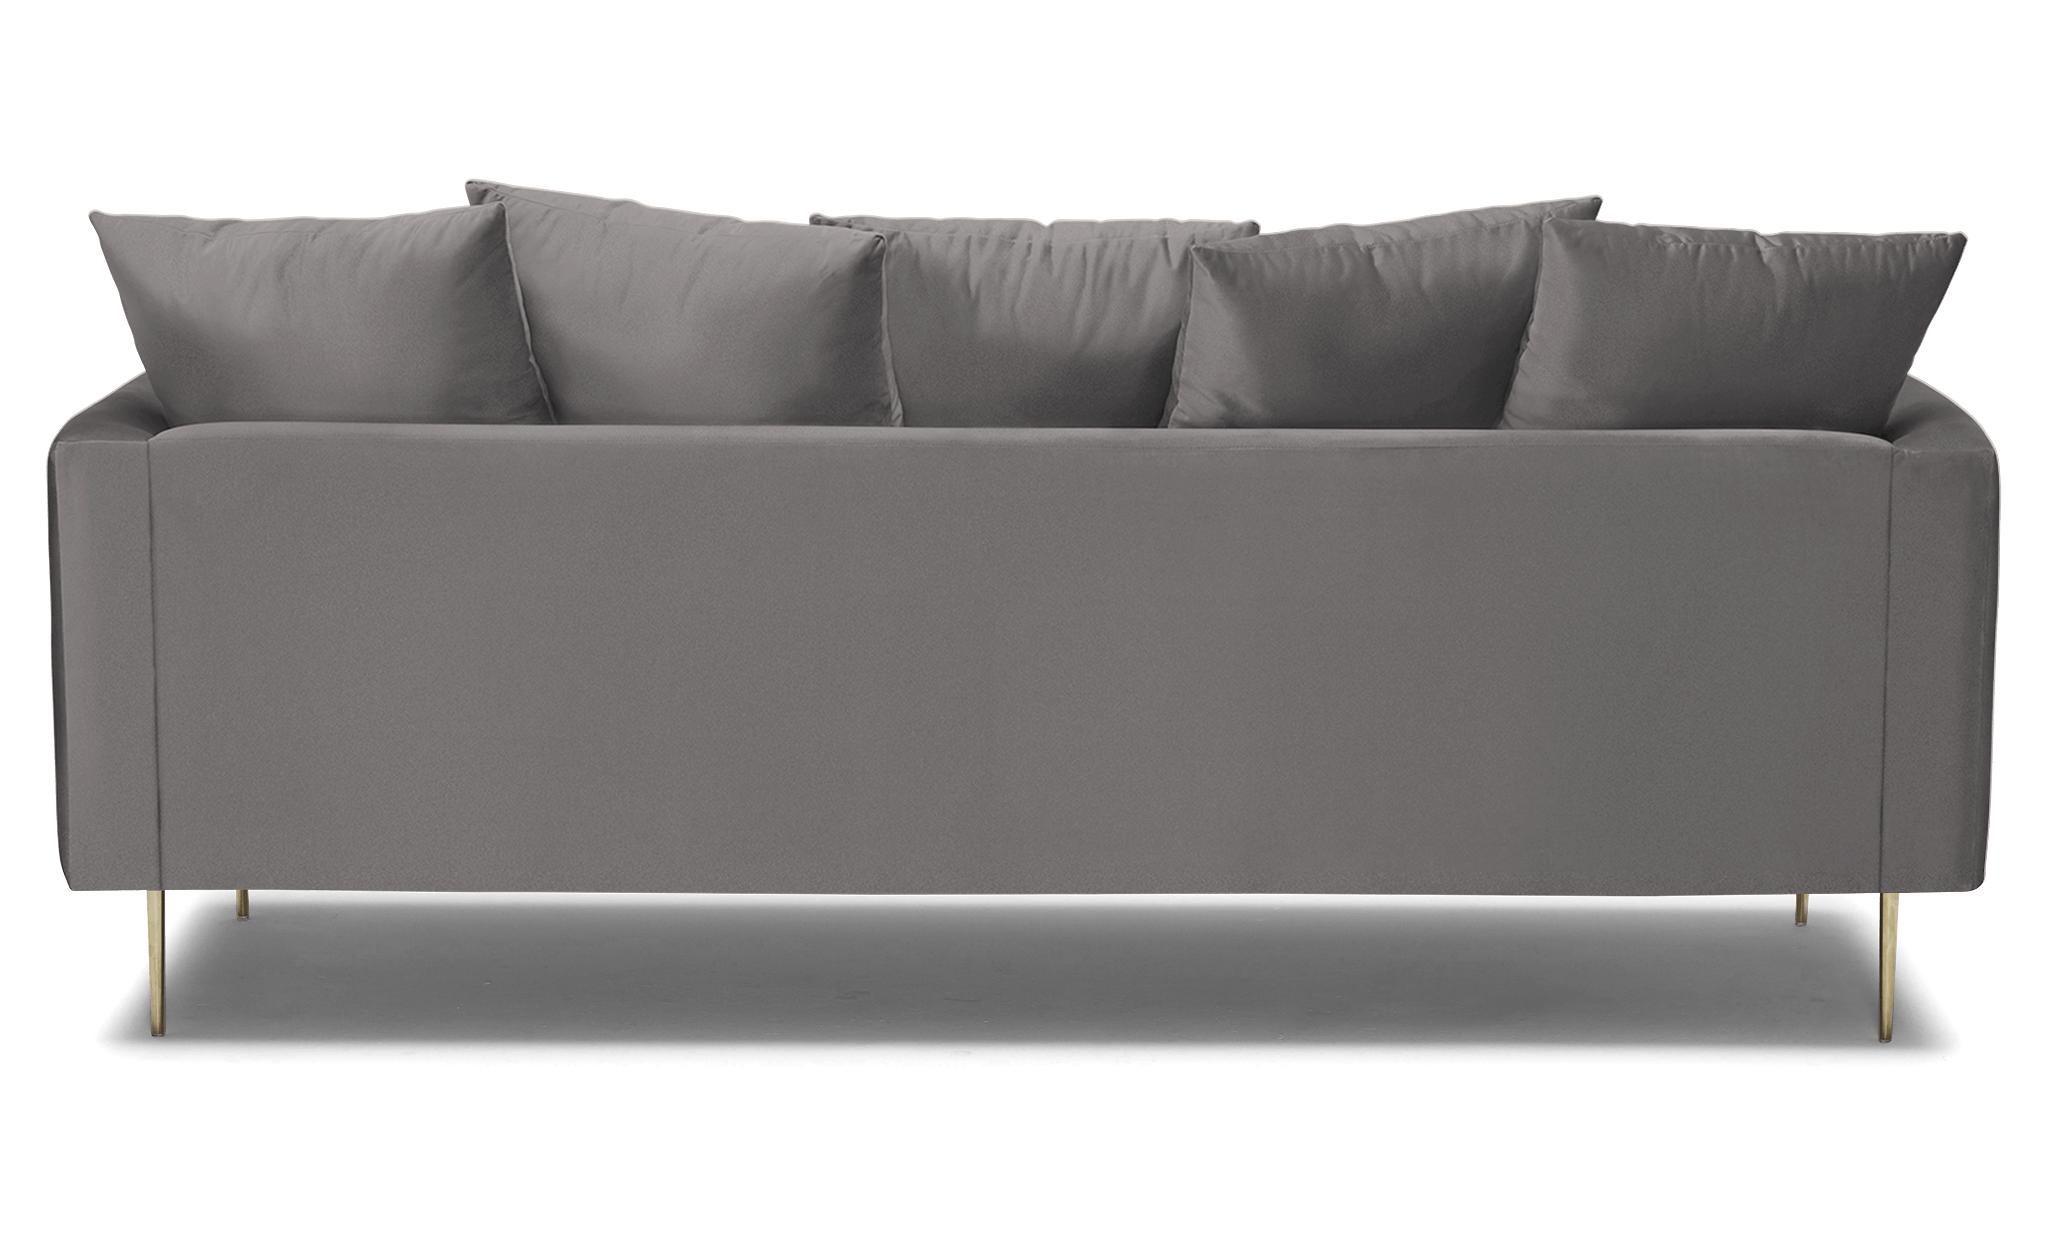 Gray Aime Mid Century Modern Sofa - Taylor Felt Grey - Image 4